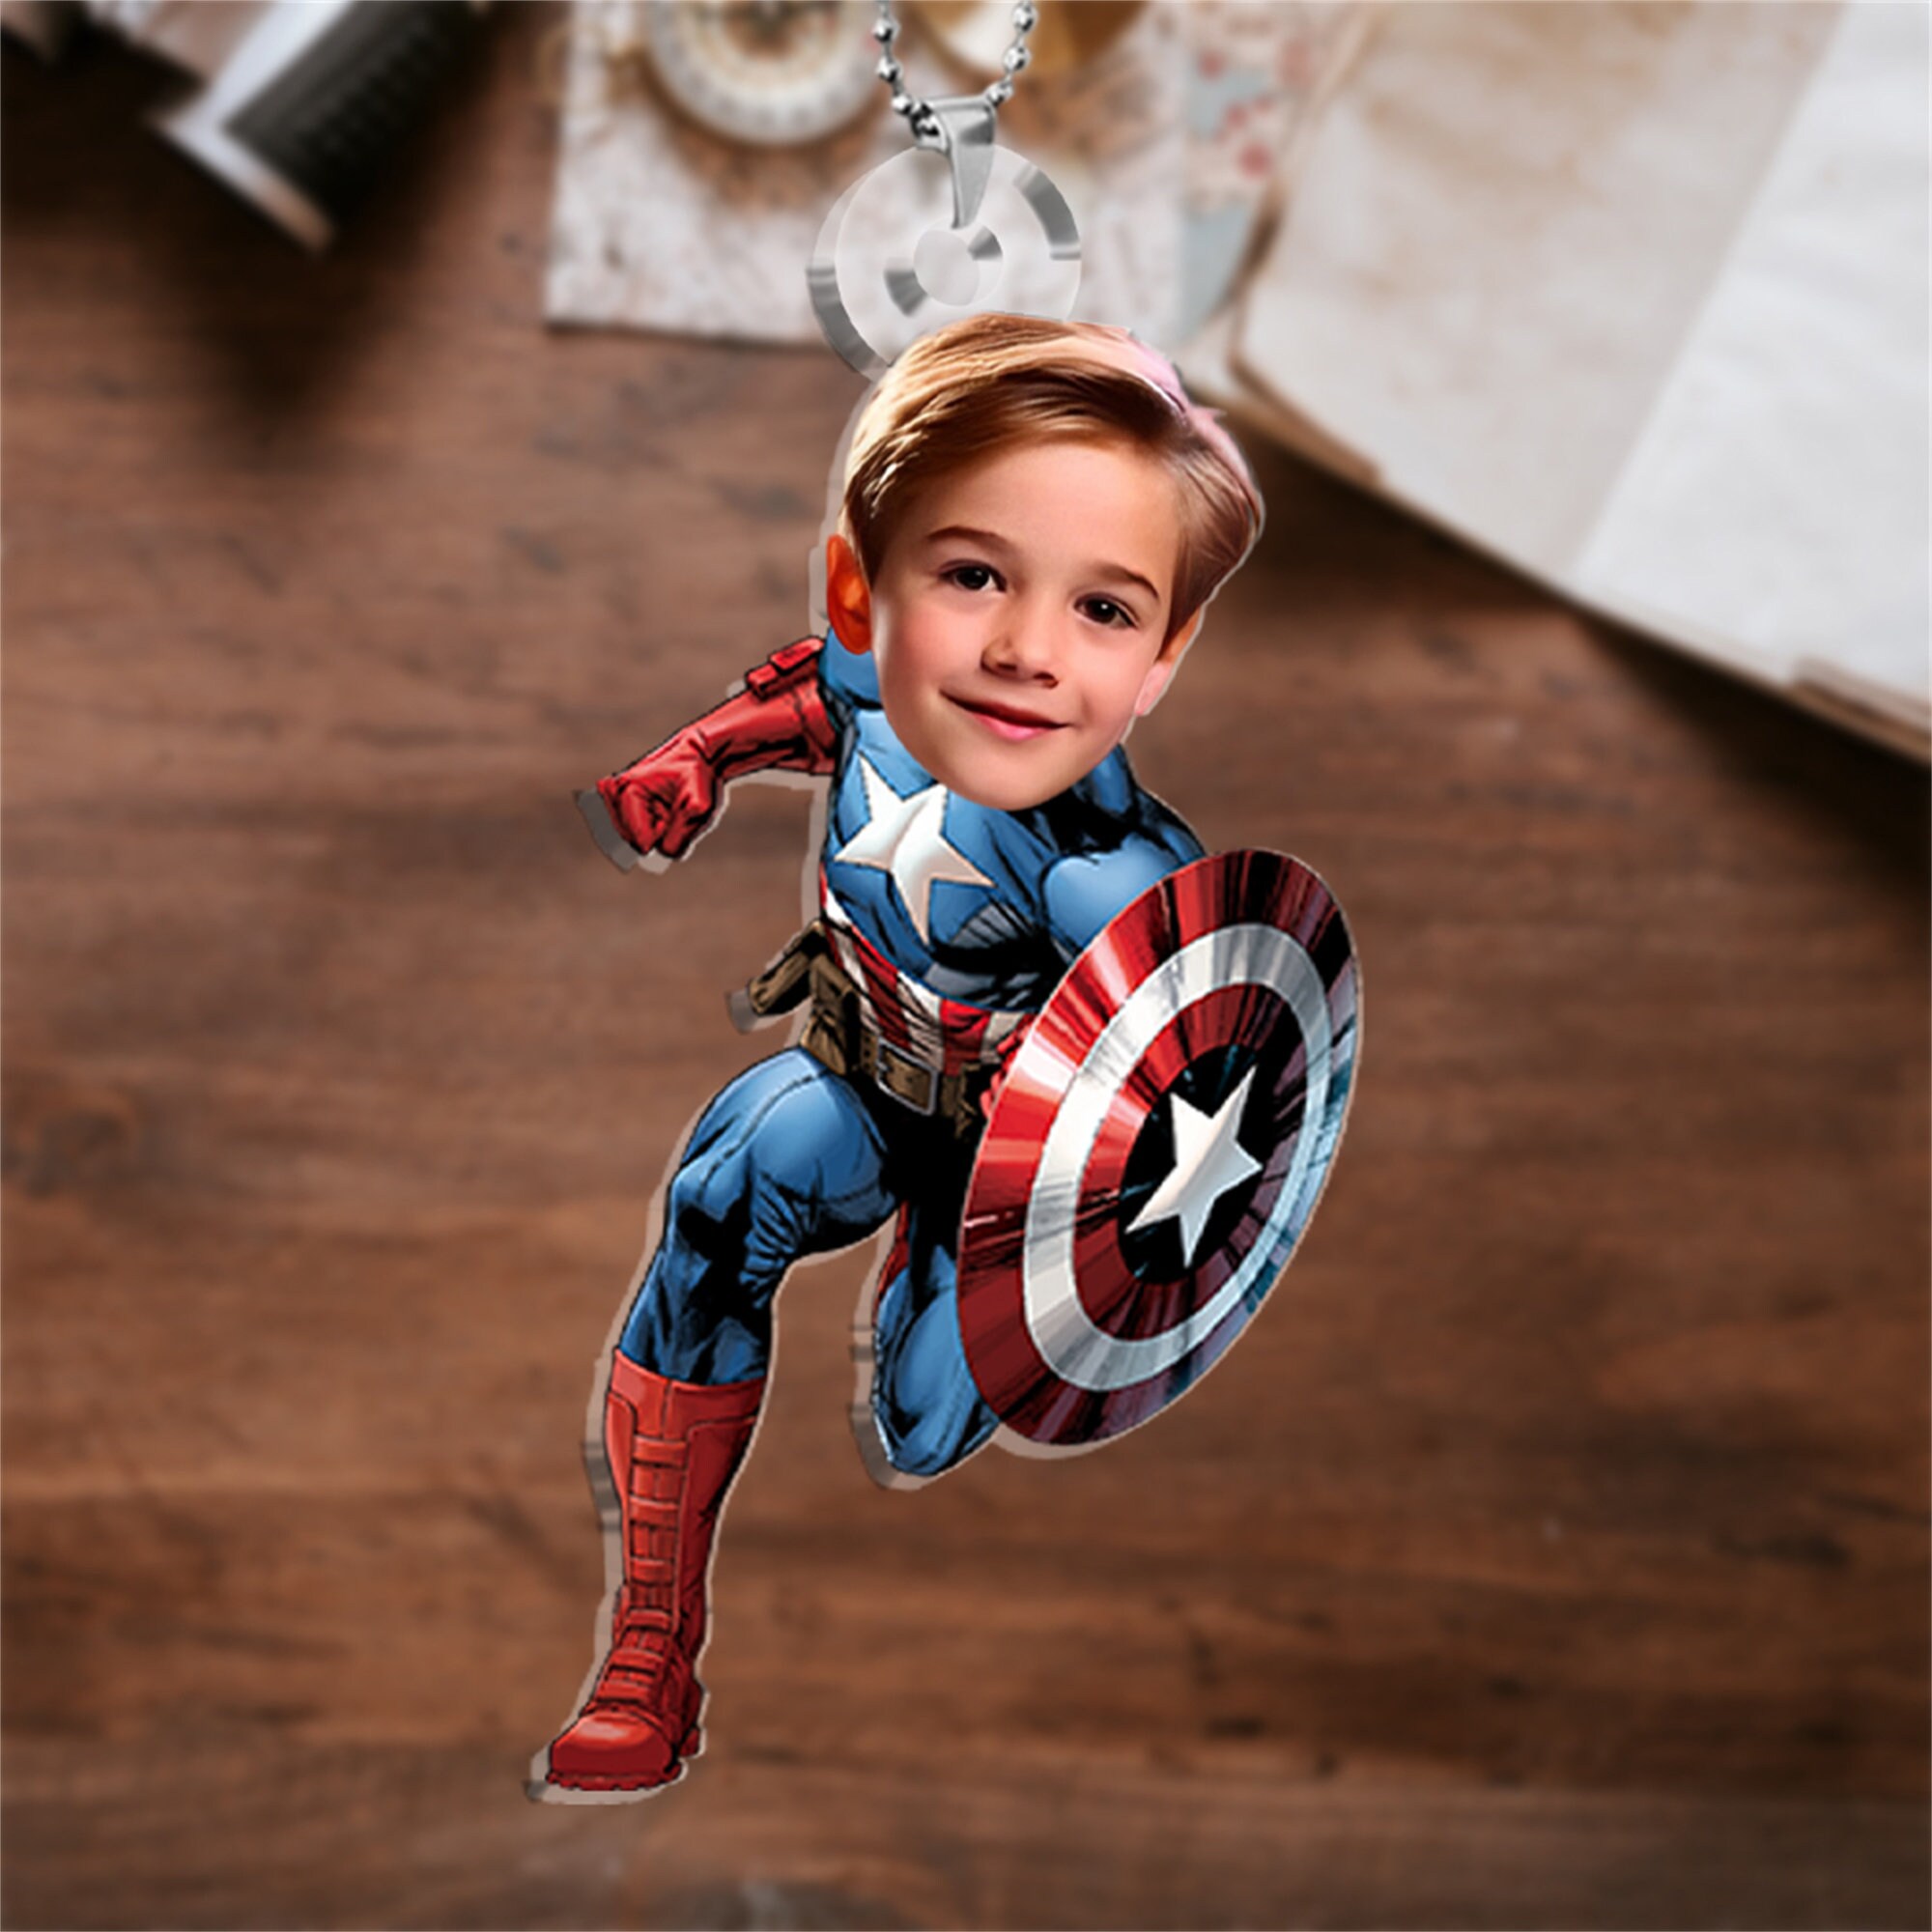 Personalized Superhero Ornament